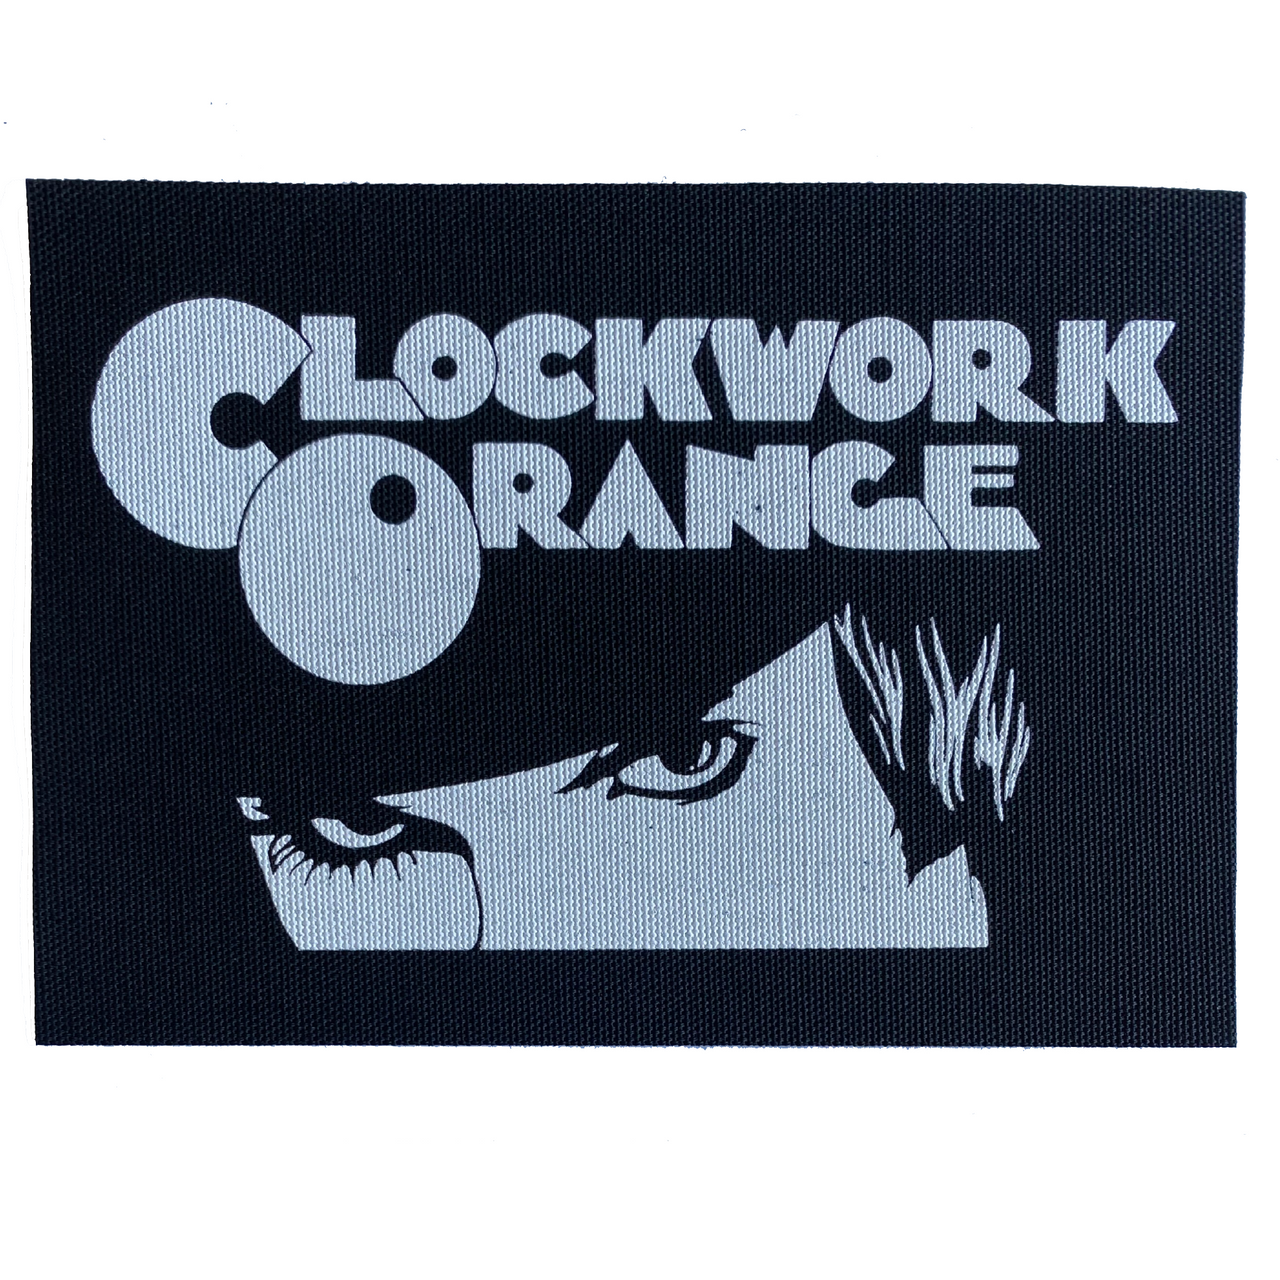 Clockwork Orange Cloth Patch